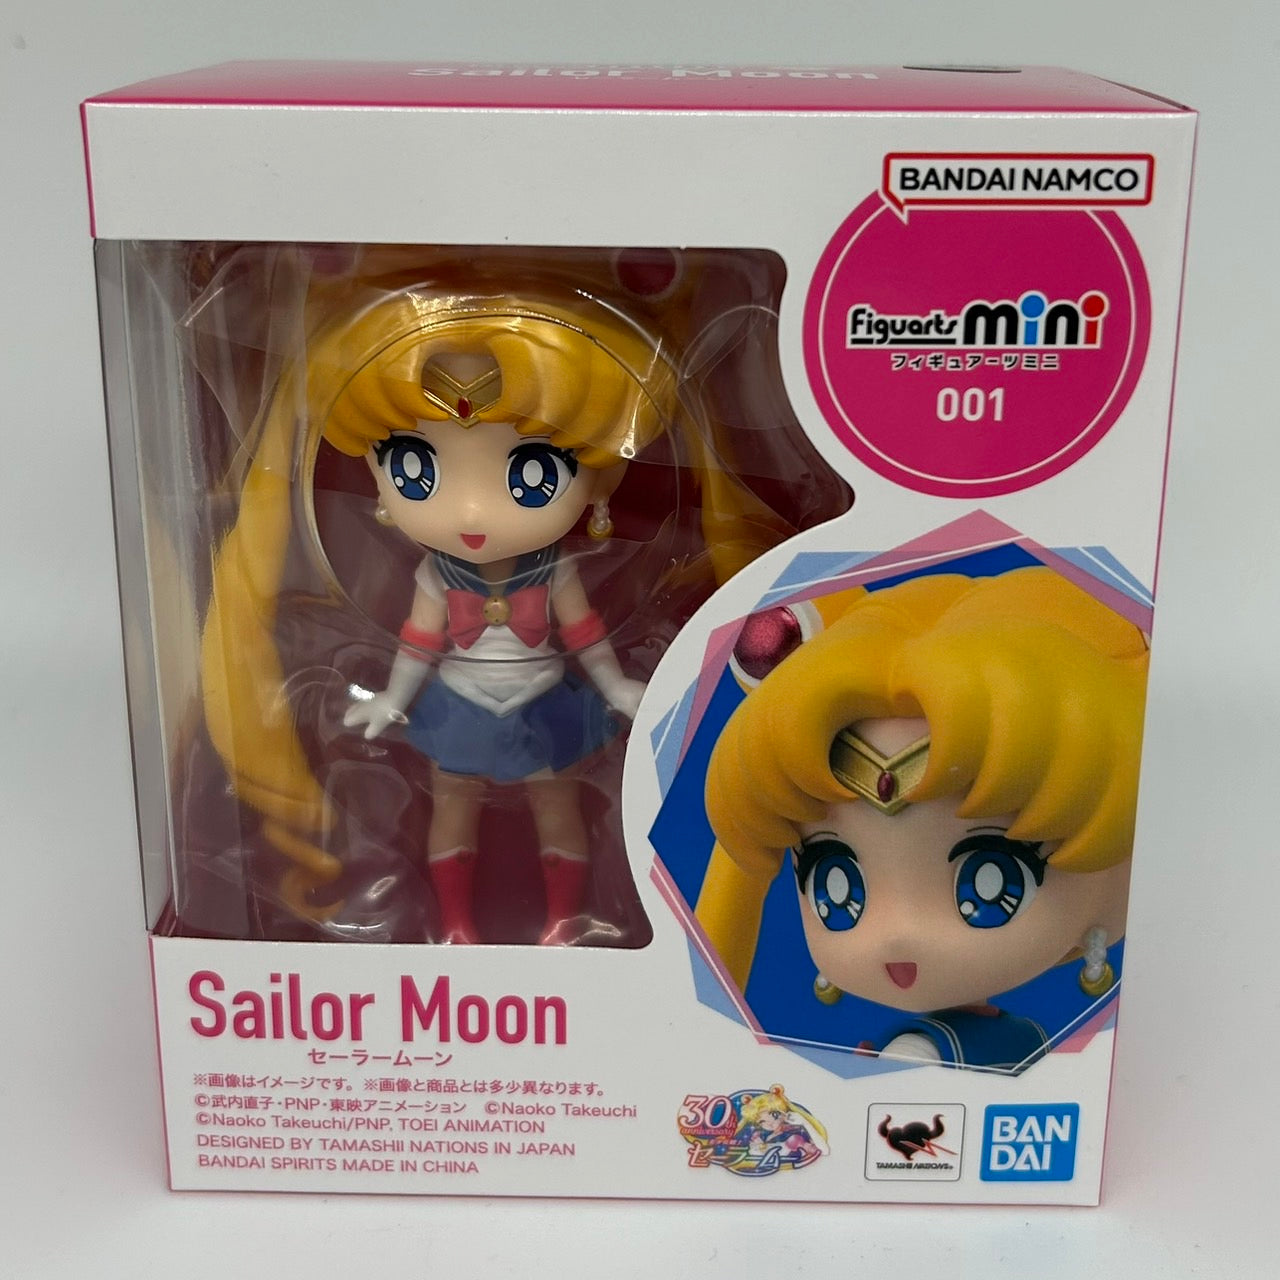 Figuarts mini Sailor Moon (Rerelease Edition) "Sailor Moon"